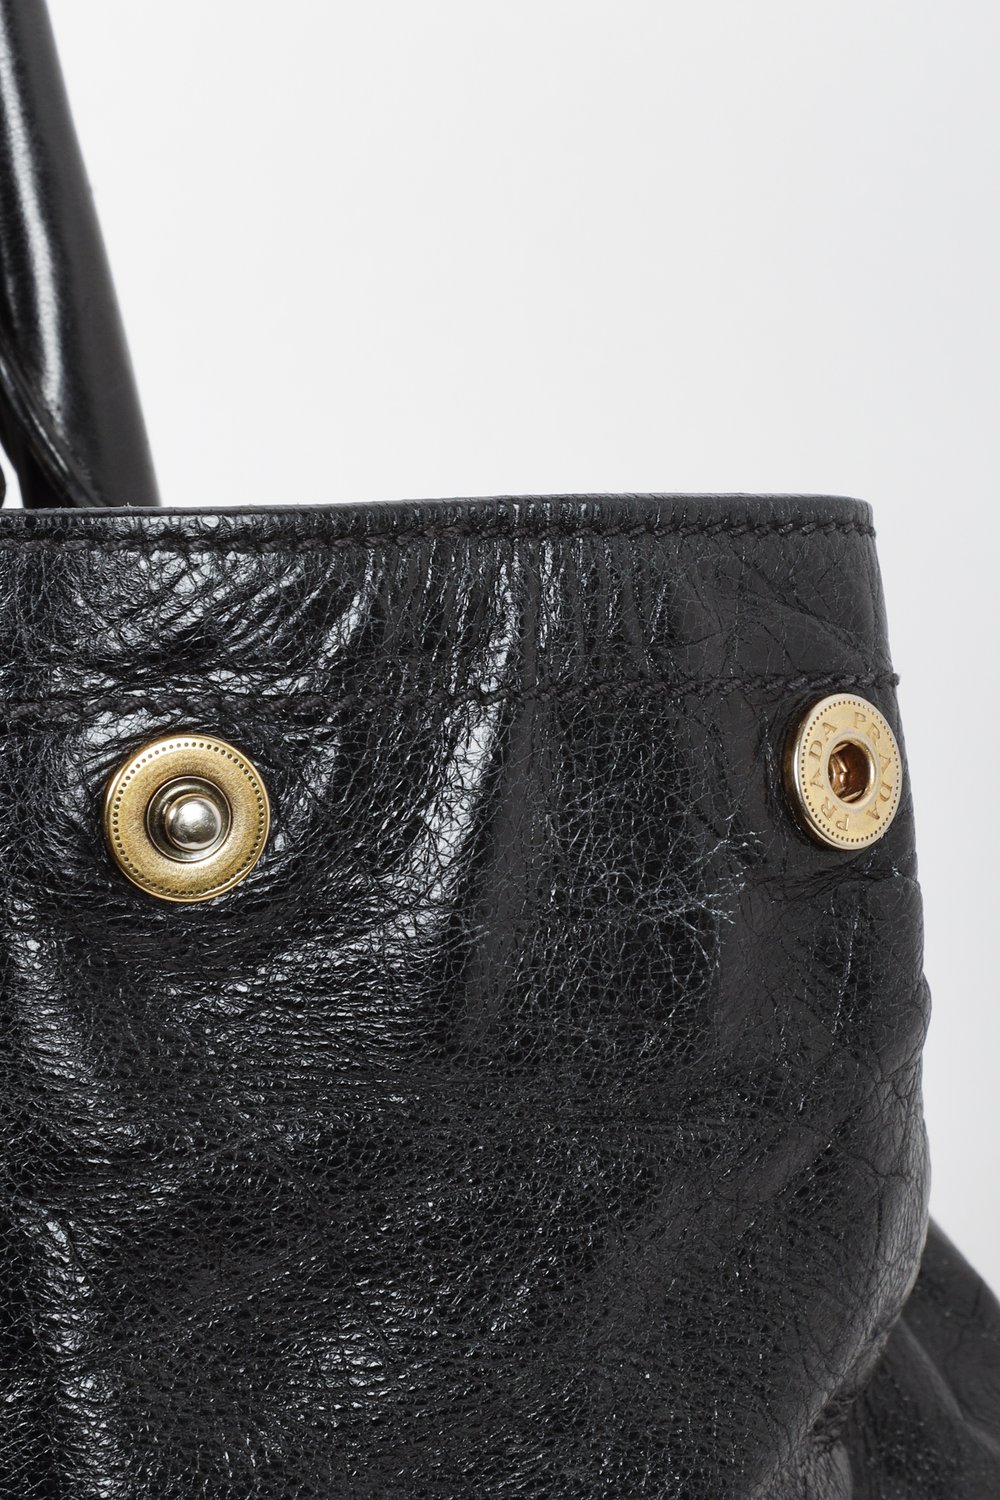 Prada Black Vitello Shine Zippy Tote Bag Leather Pony-style